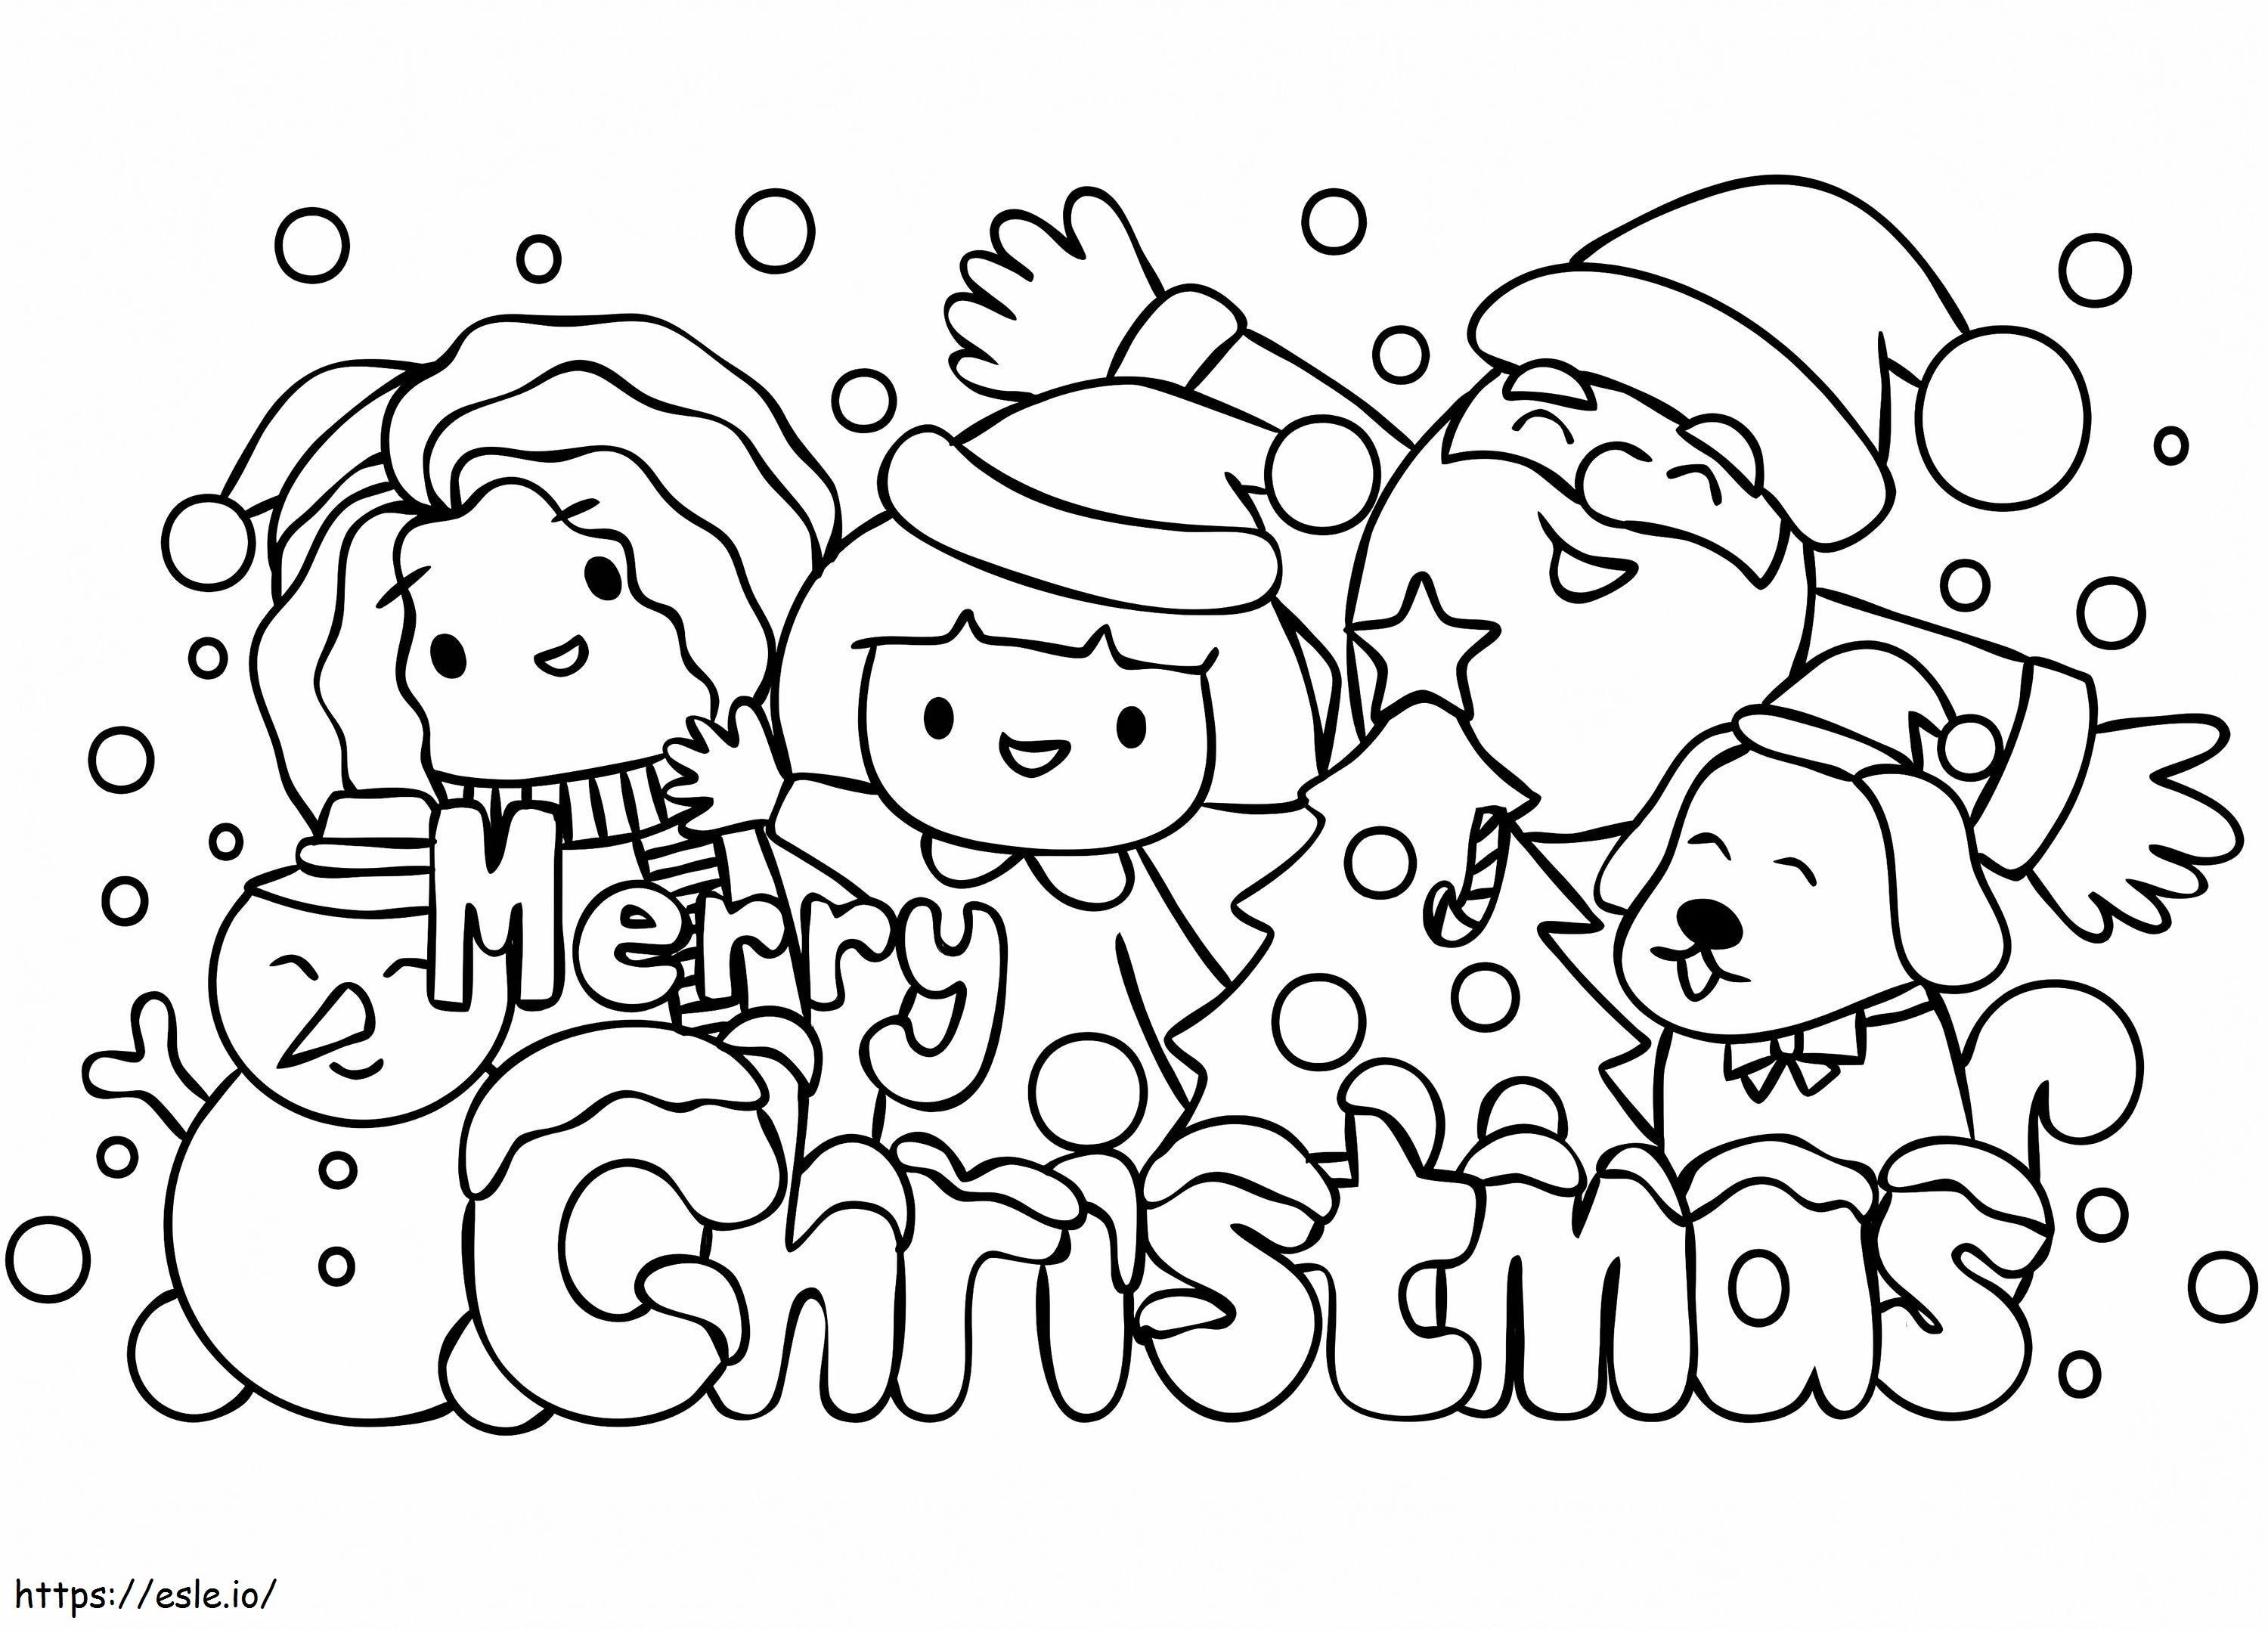 Printable Cute Christmas coloring page